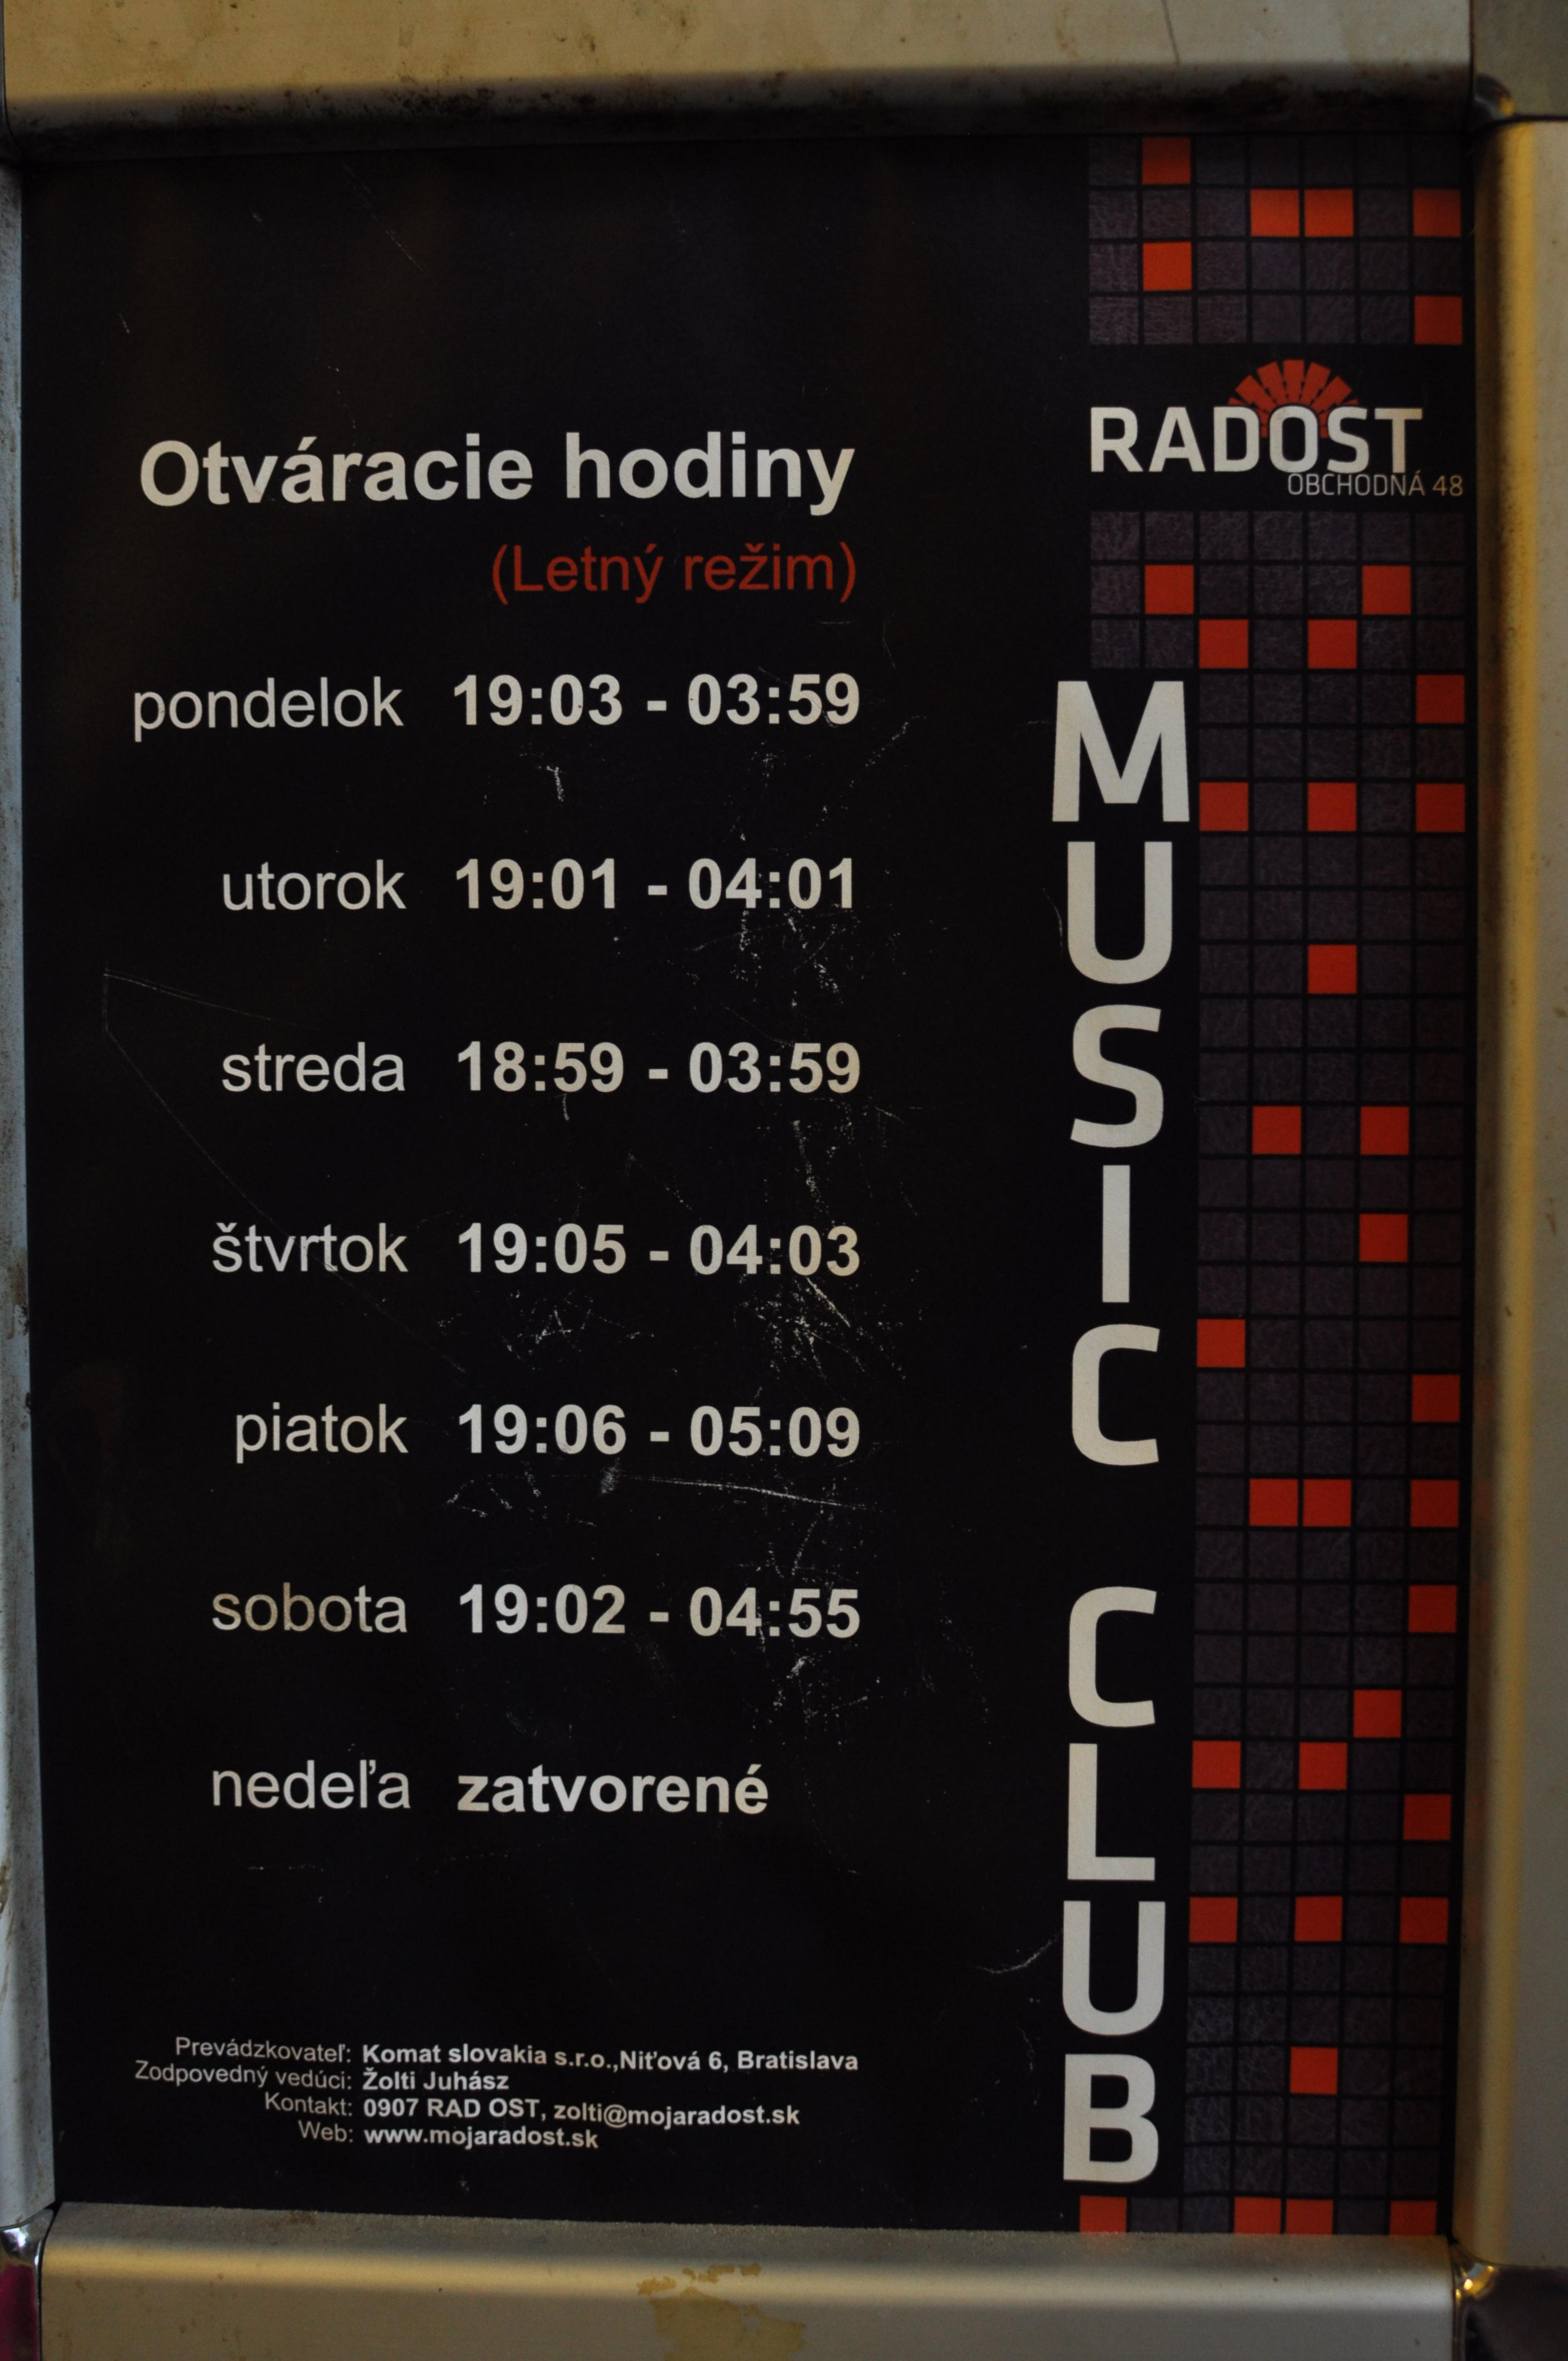 Cover image of this place Radosť Music Club